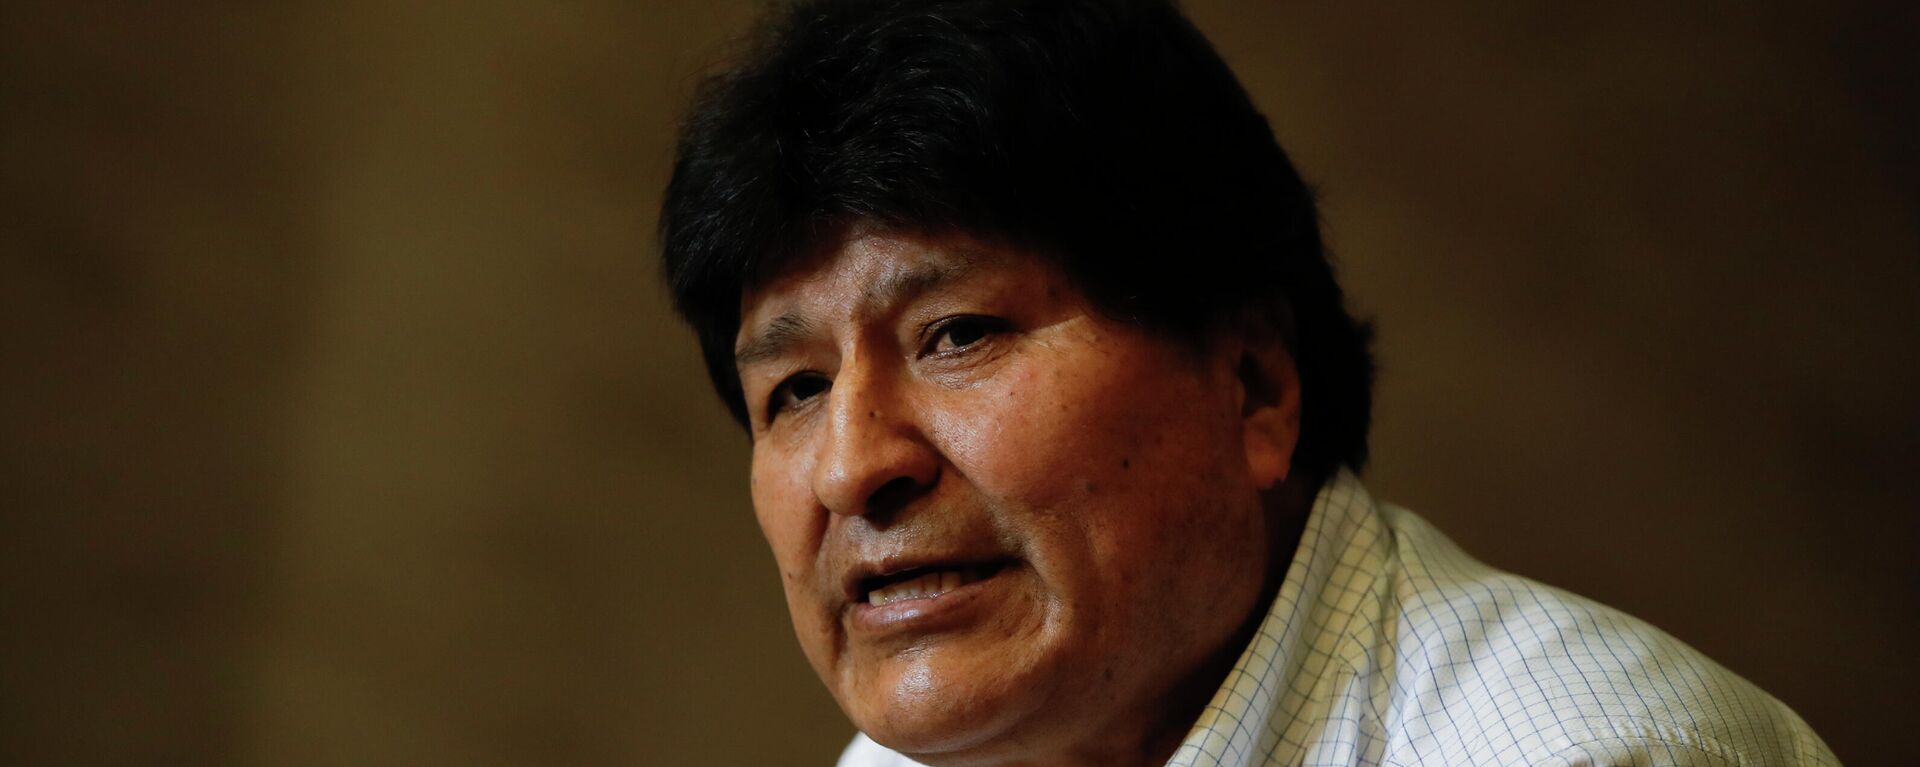 El expresidente socialista boliviano Evo Morales (2006-2019) - Sputnik Mundo, 1920, 26.08.2022